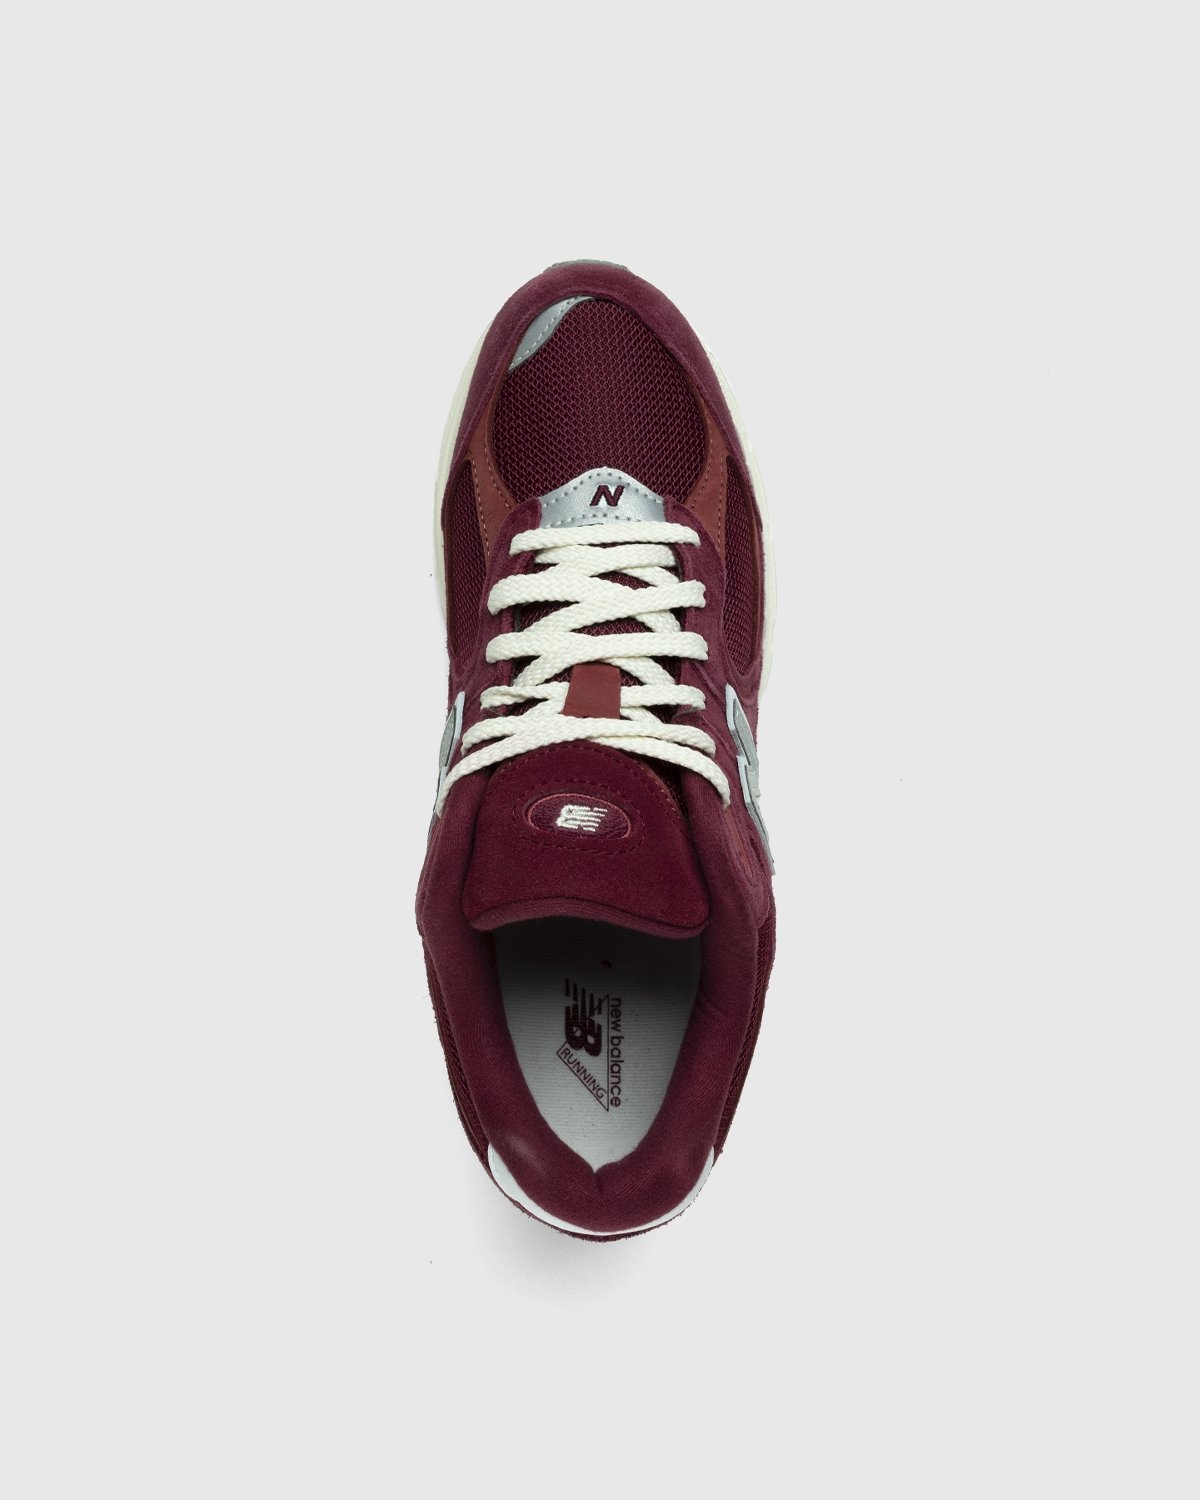 New Balance – M2002RHA Garnet - Low Top Sneakers - Red - Image 5